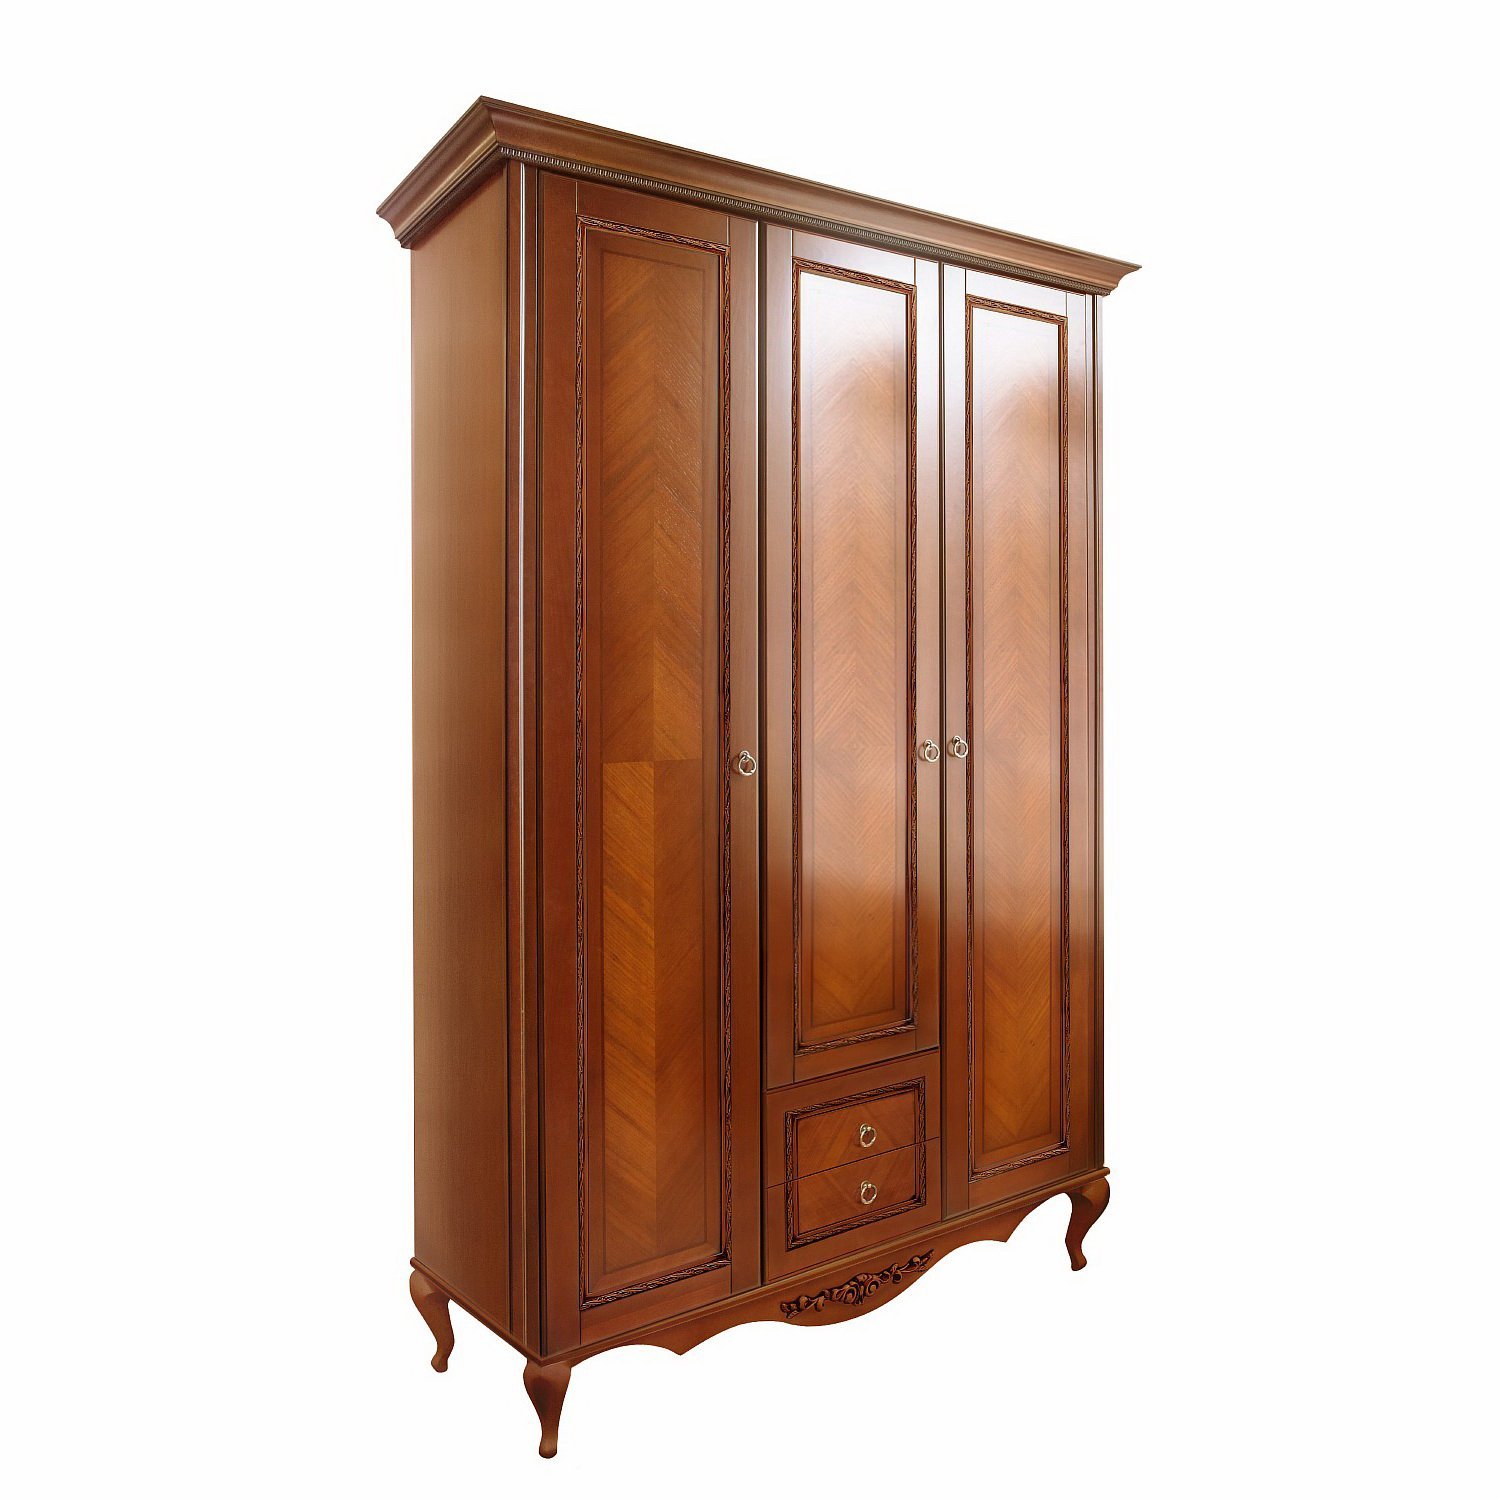 Шкаф платяной Timber Неаполь, 3-х дверный 159x65x227 см, цвет: янтарь (Т-523Д/Y)Т-523Д